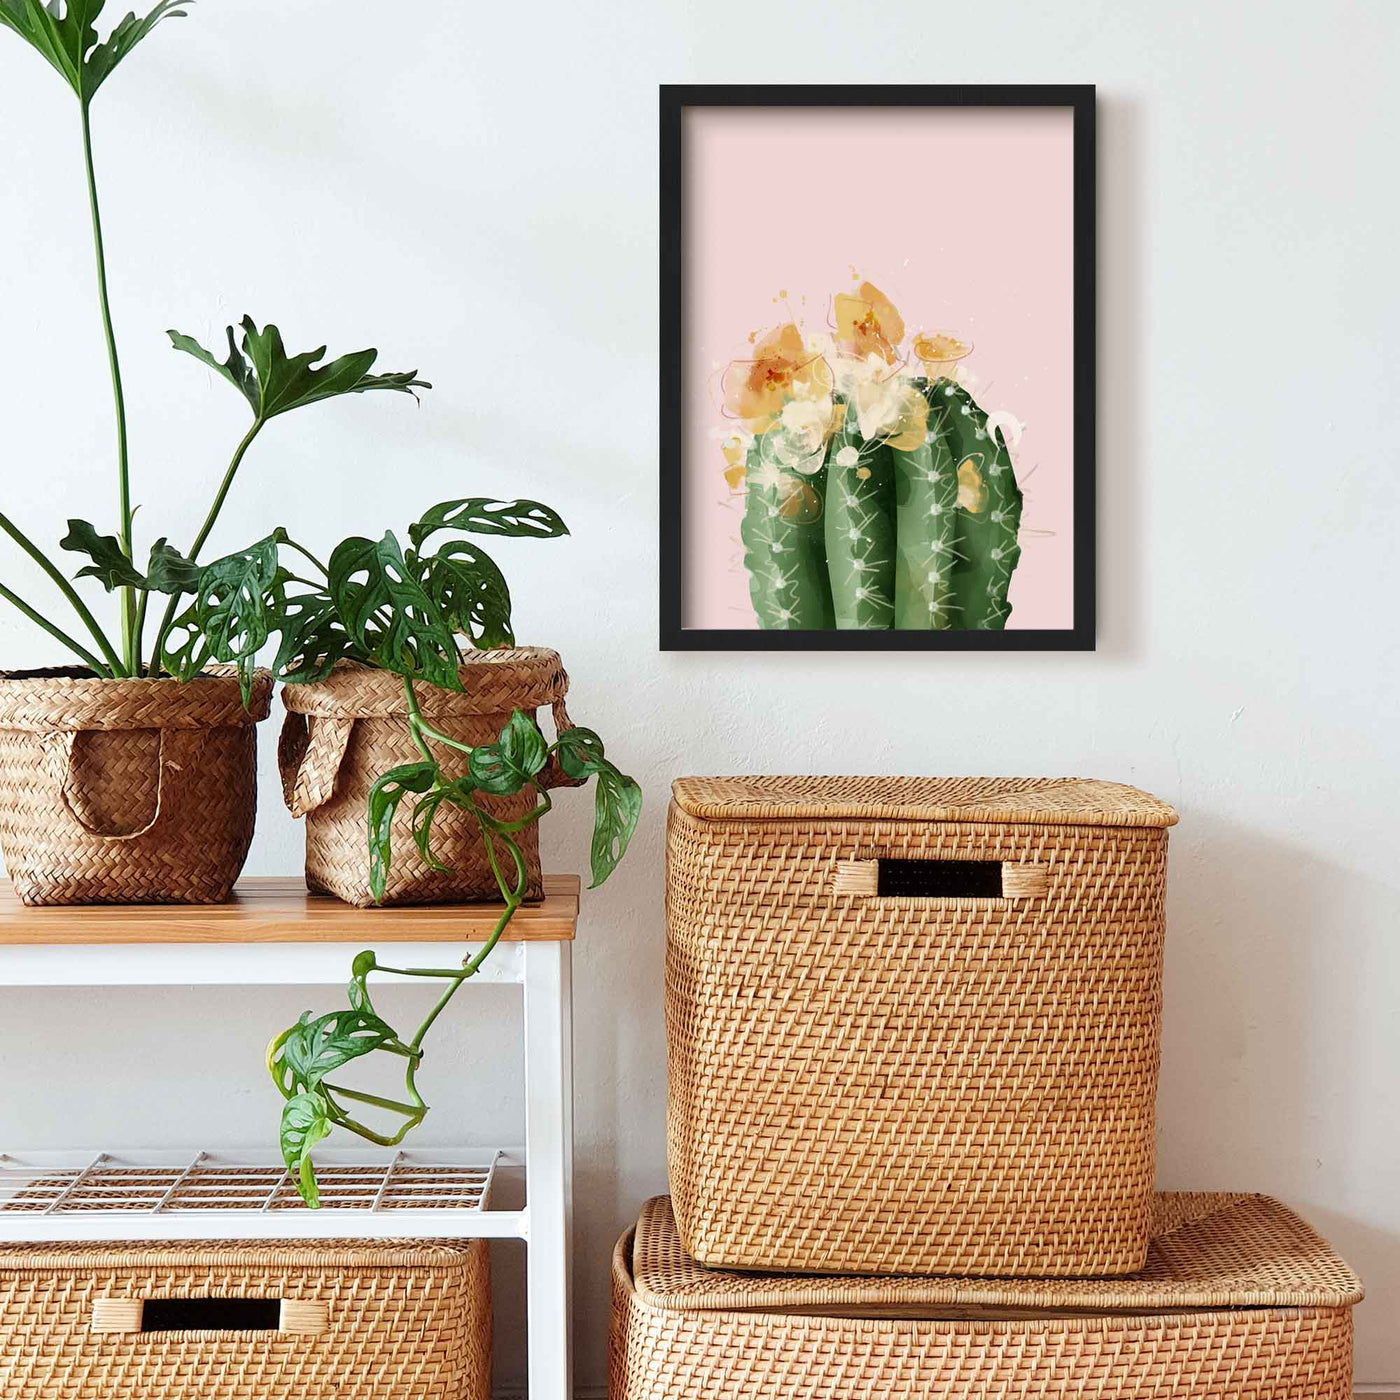 Green Lili 30x40cm (12x16") / Black Frame Pink Flowering Barrel Cactus Print